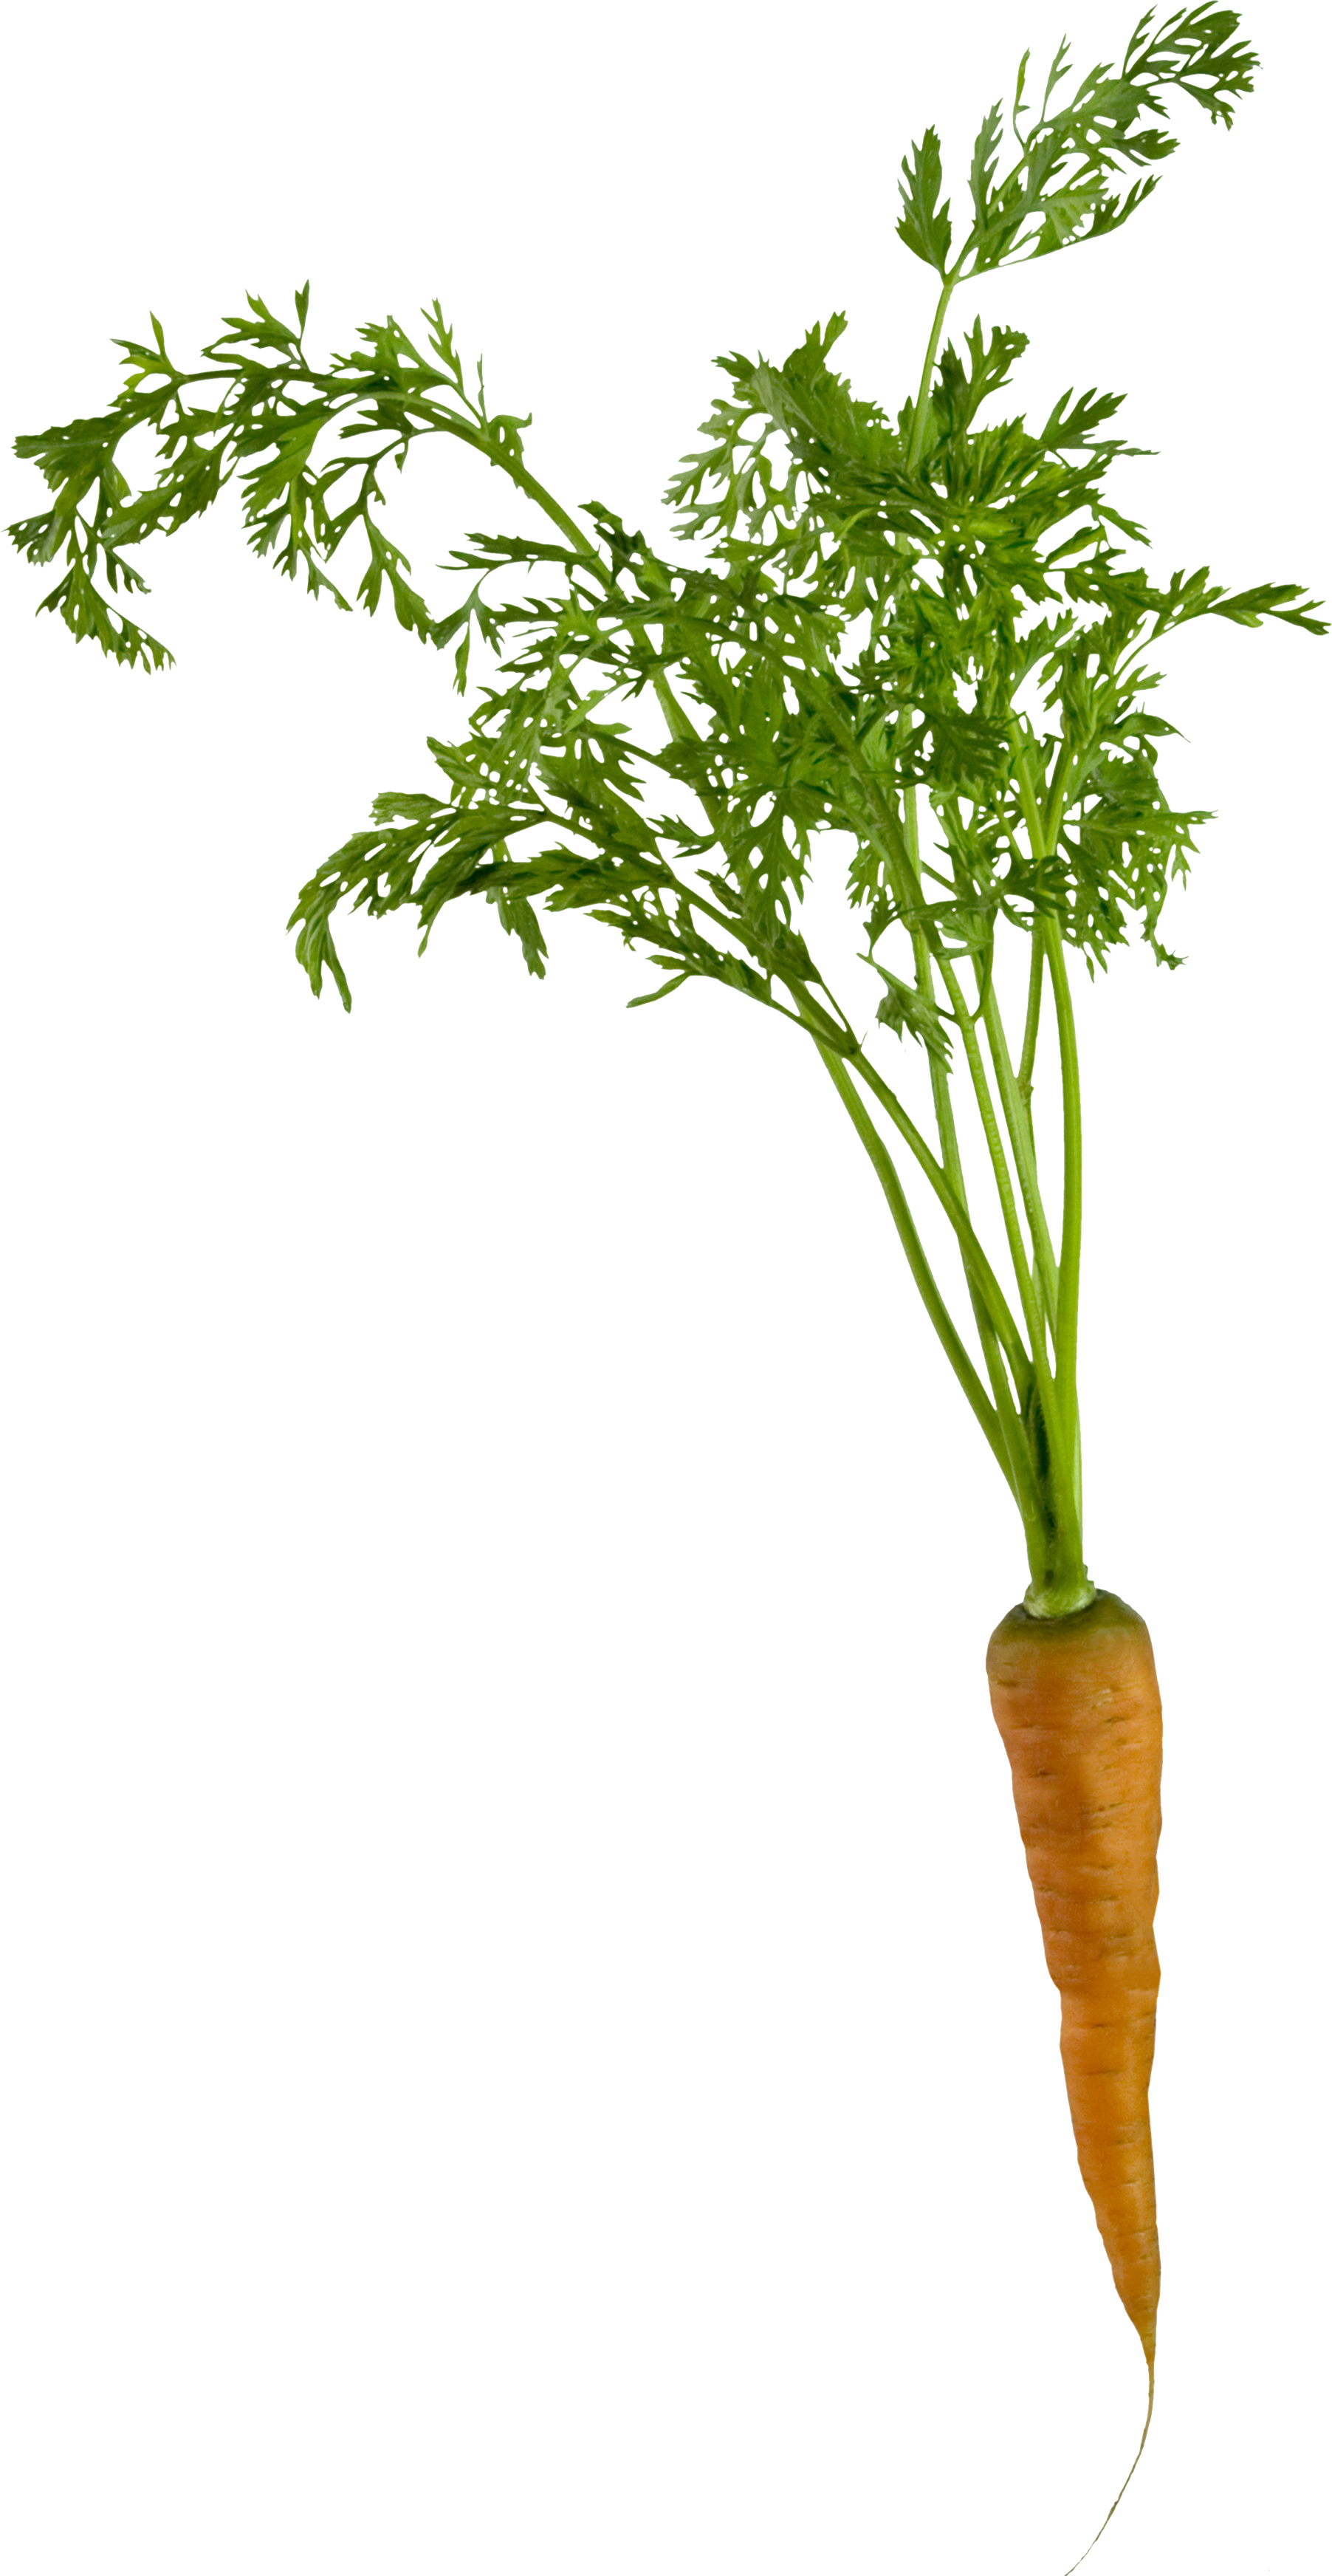 farmers clipart carrot